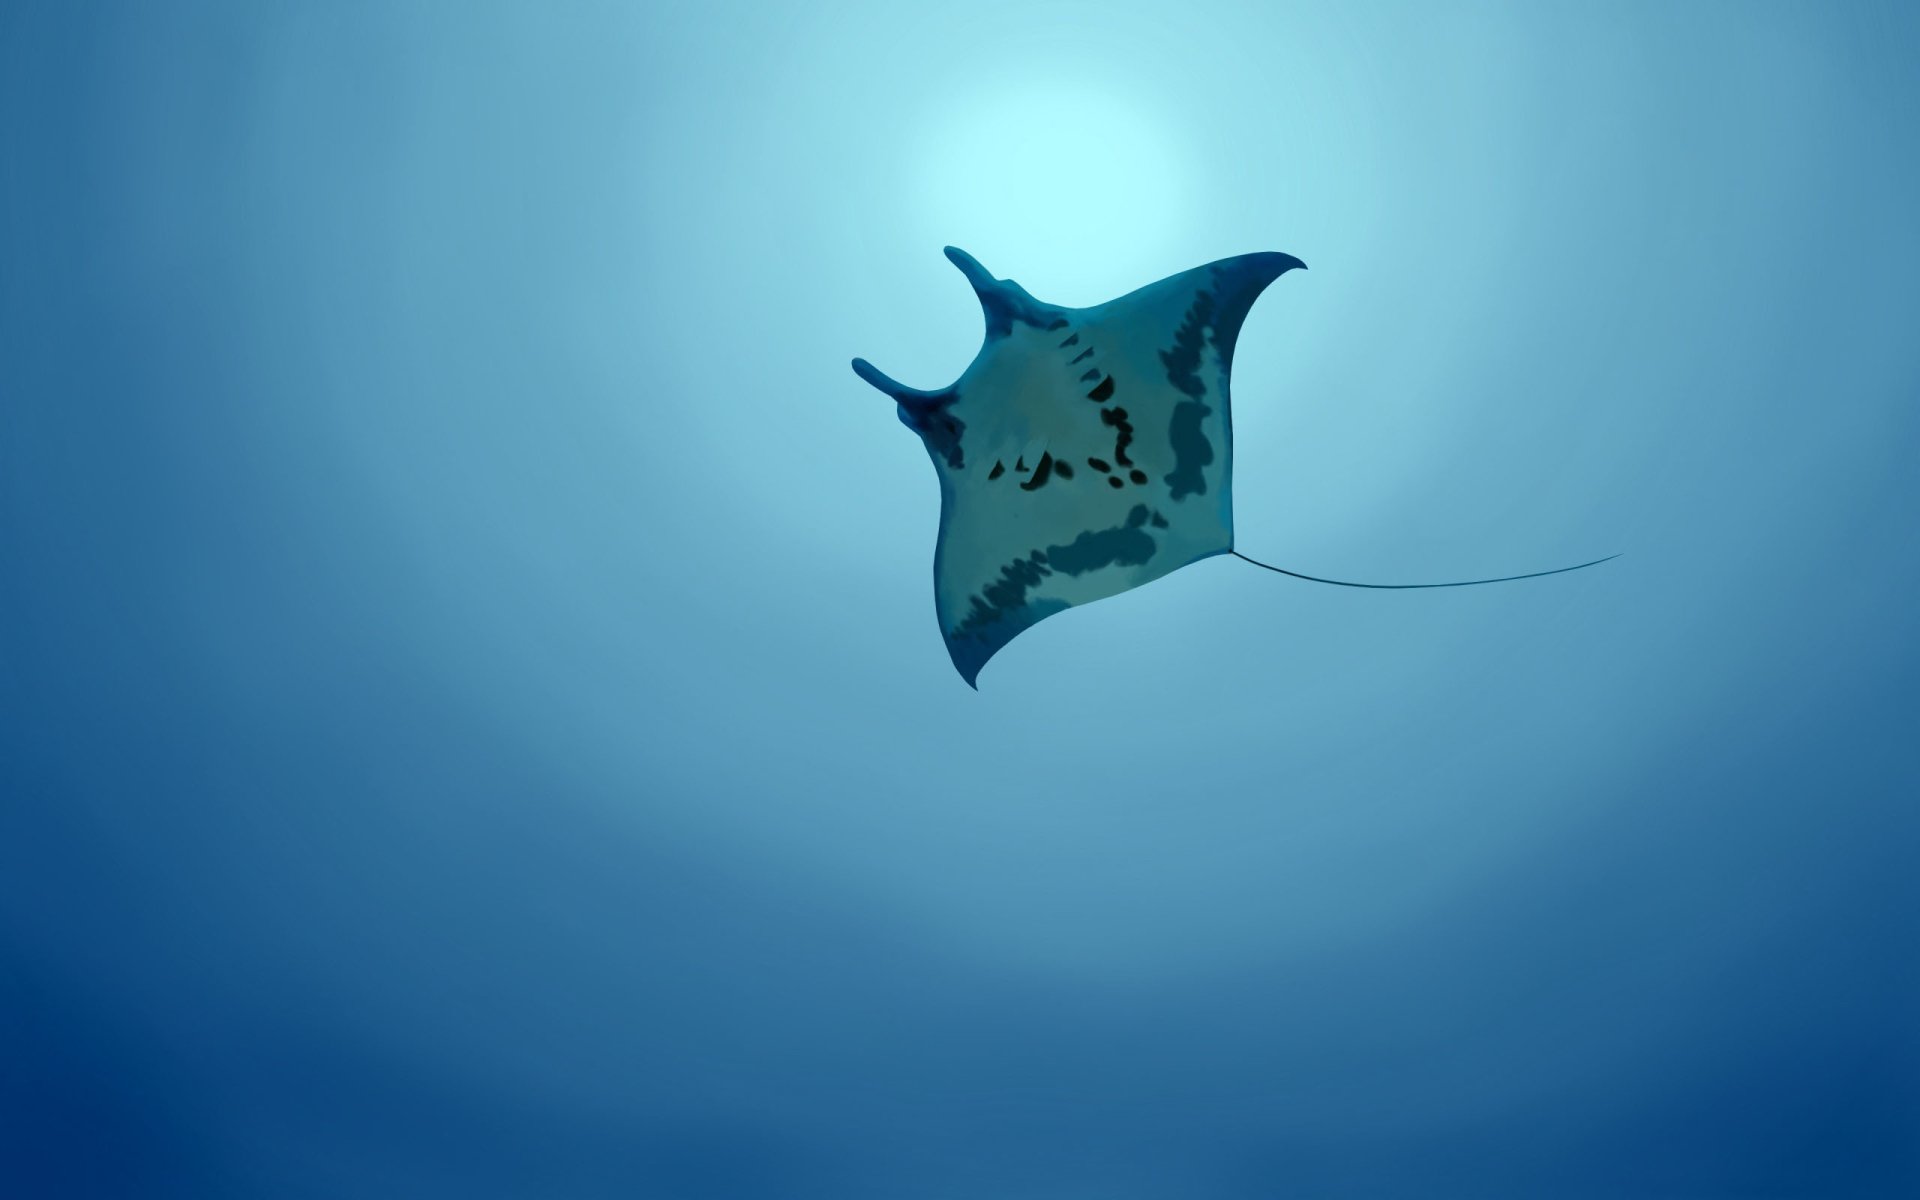 manta ray vs sting ray